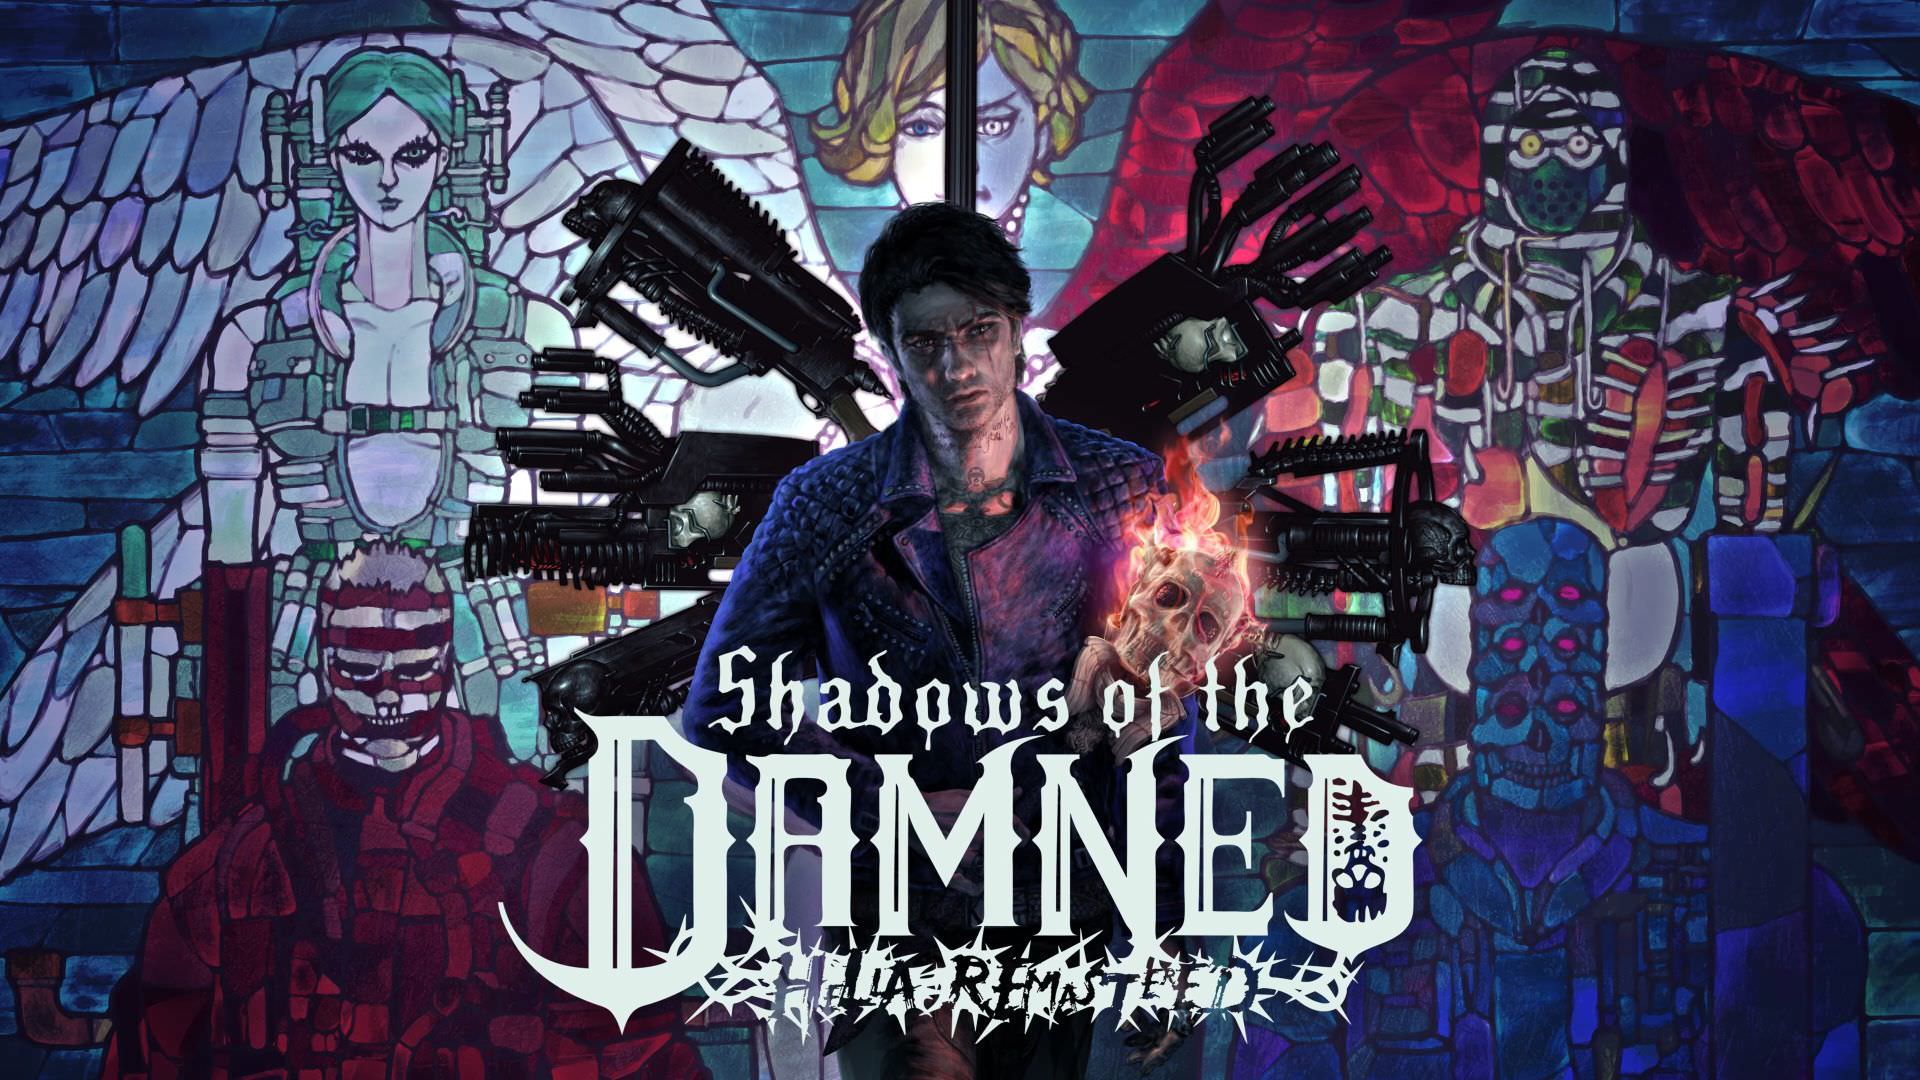 زمان انتشار ریمستر Shadows of the Damned اعلام شد